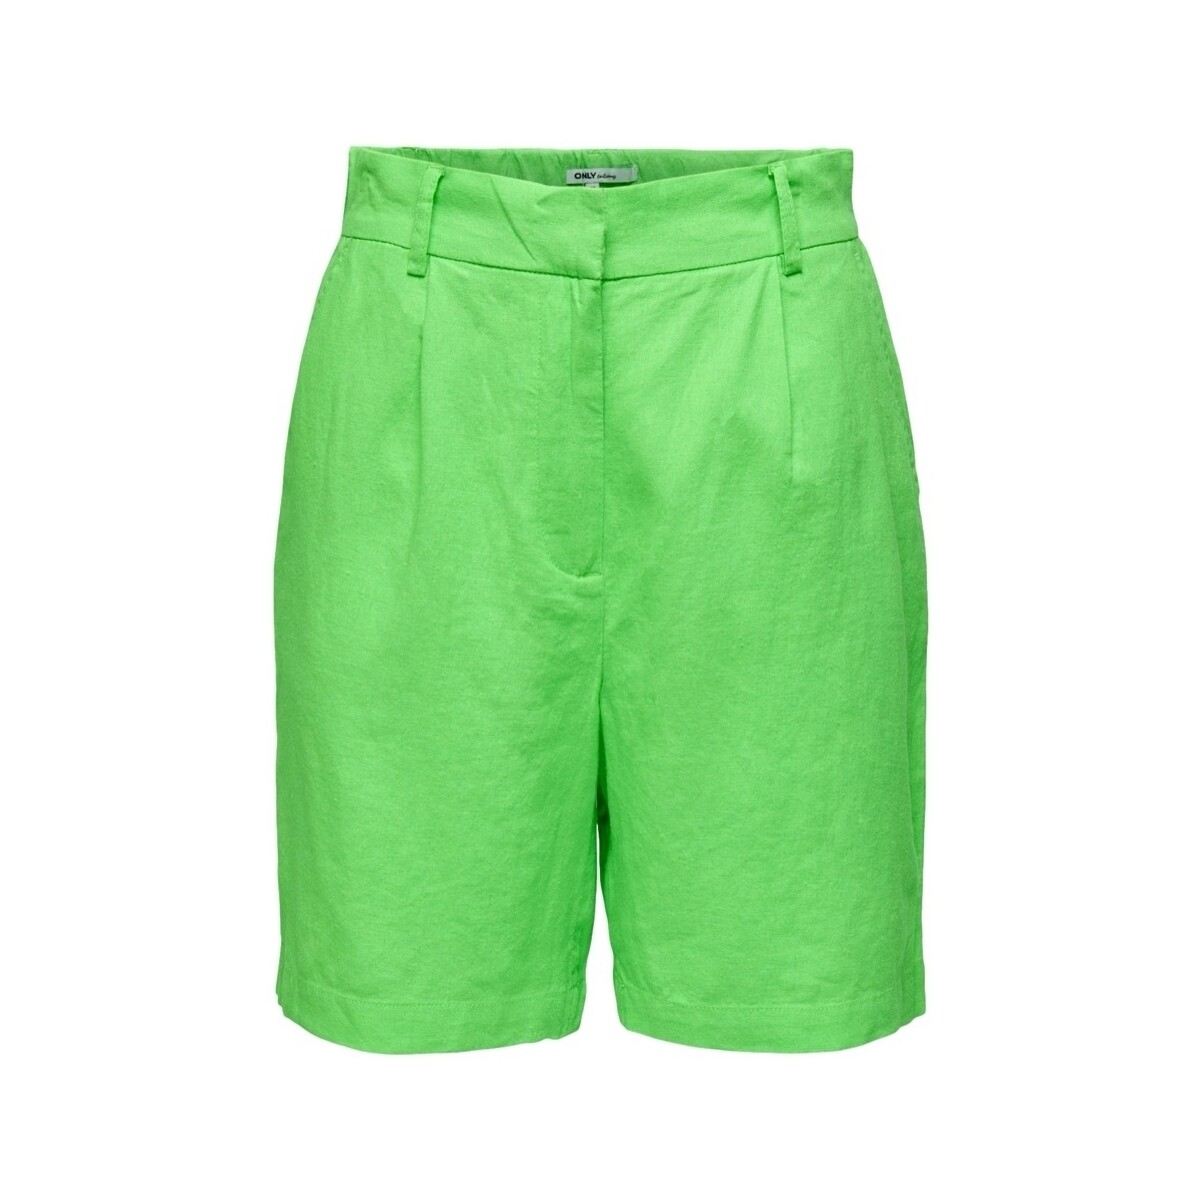 Textiel Dames Korte broeken / Bermuda's Only Caro HW Long Shorts - Summer Green Groen